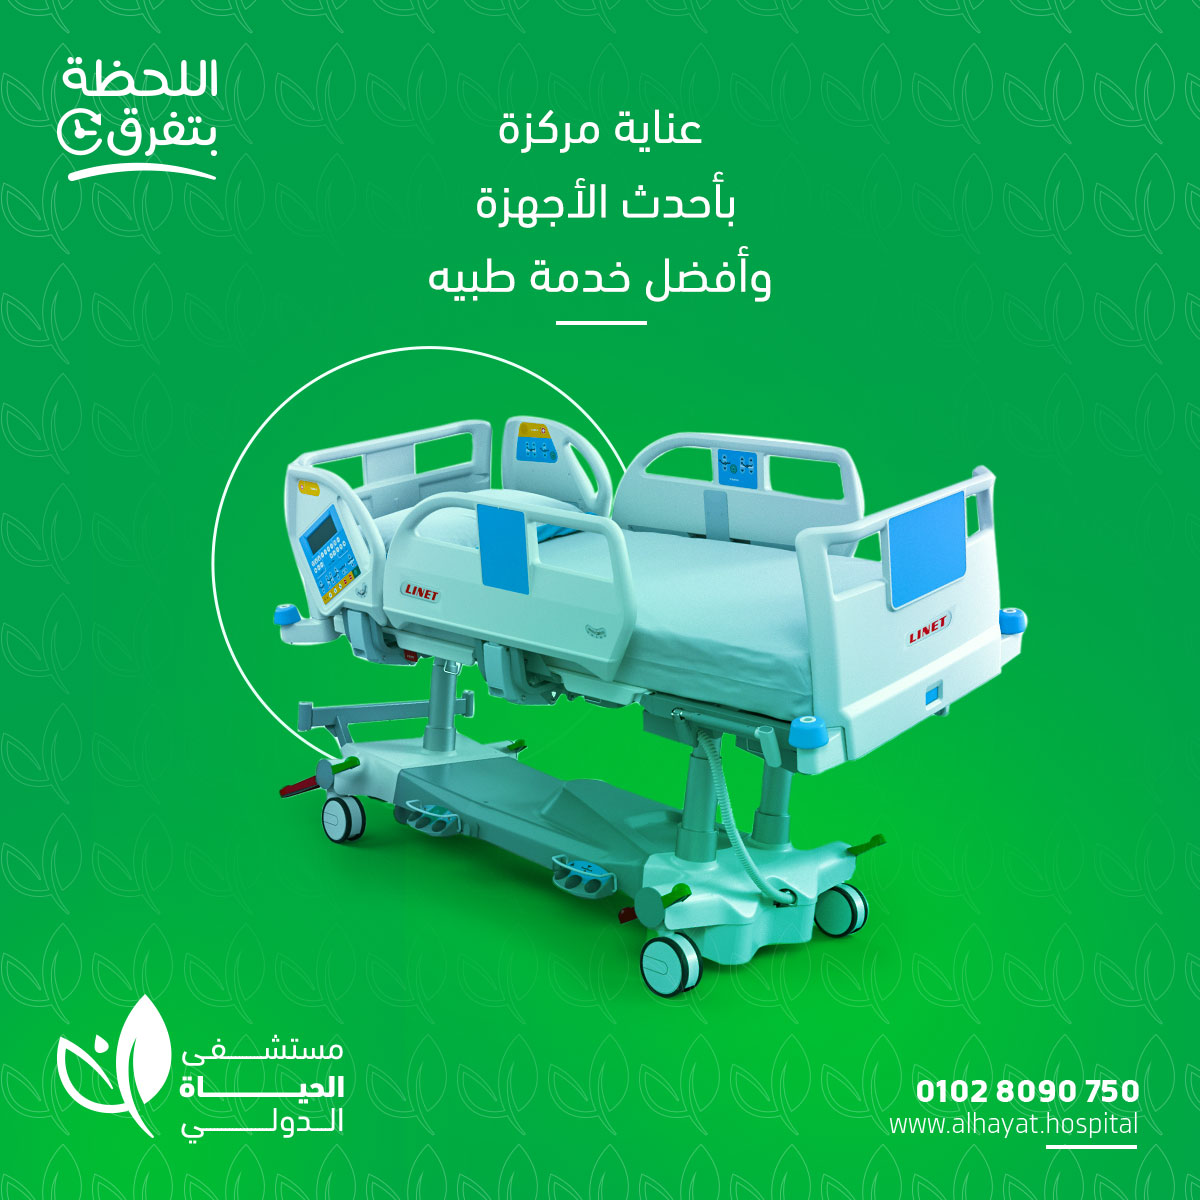 Al Hayat Hospital Facebook campaign social media strategy content creation creative copywriting art direction